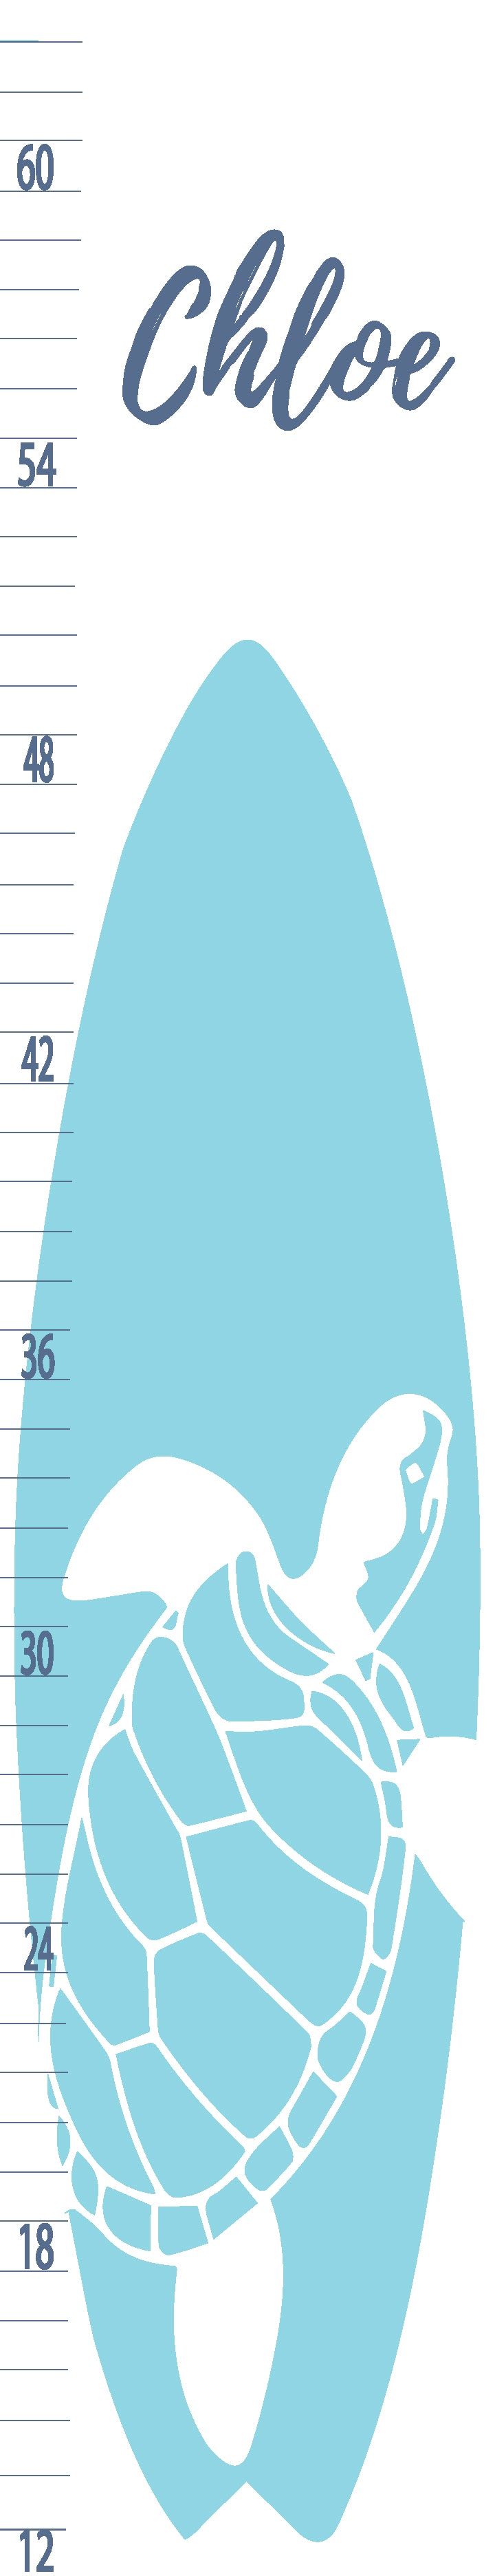 Surf Board Growth Chart